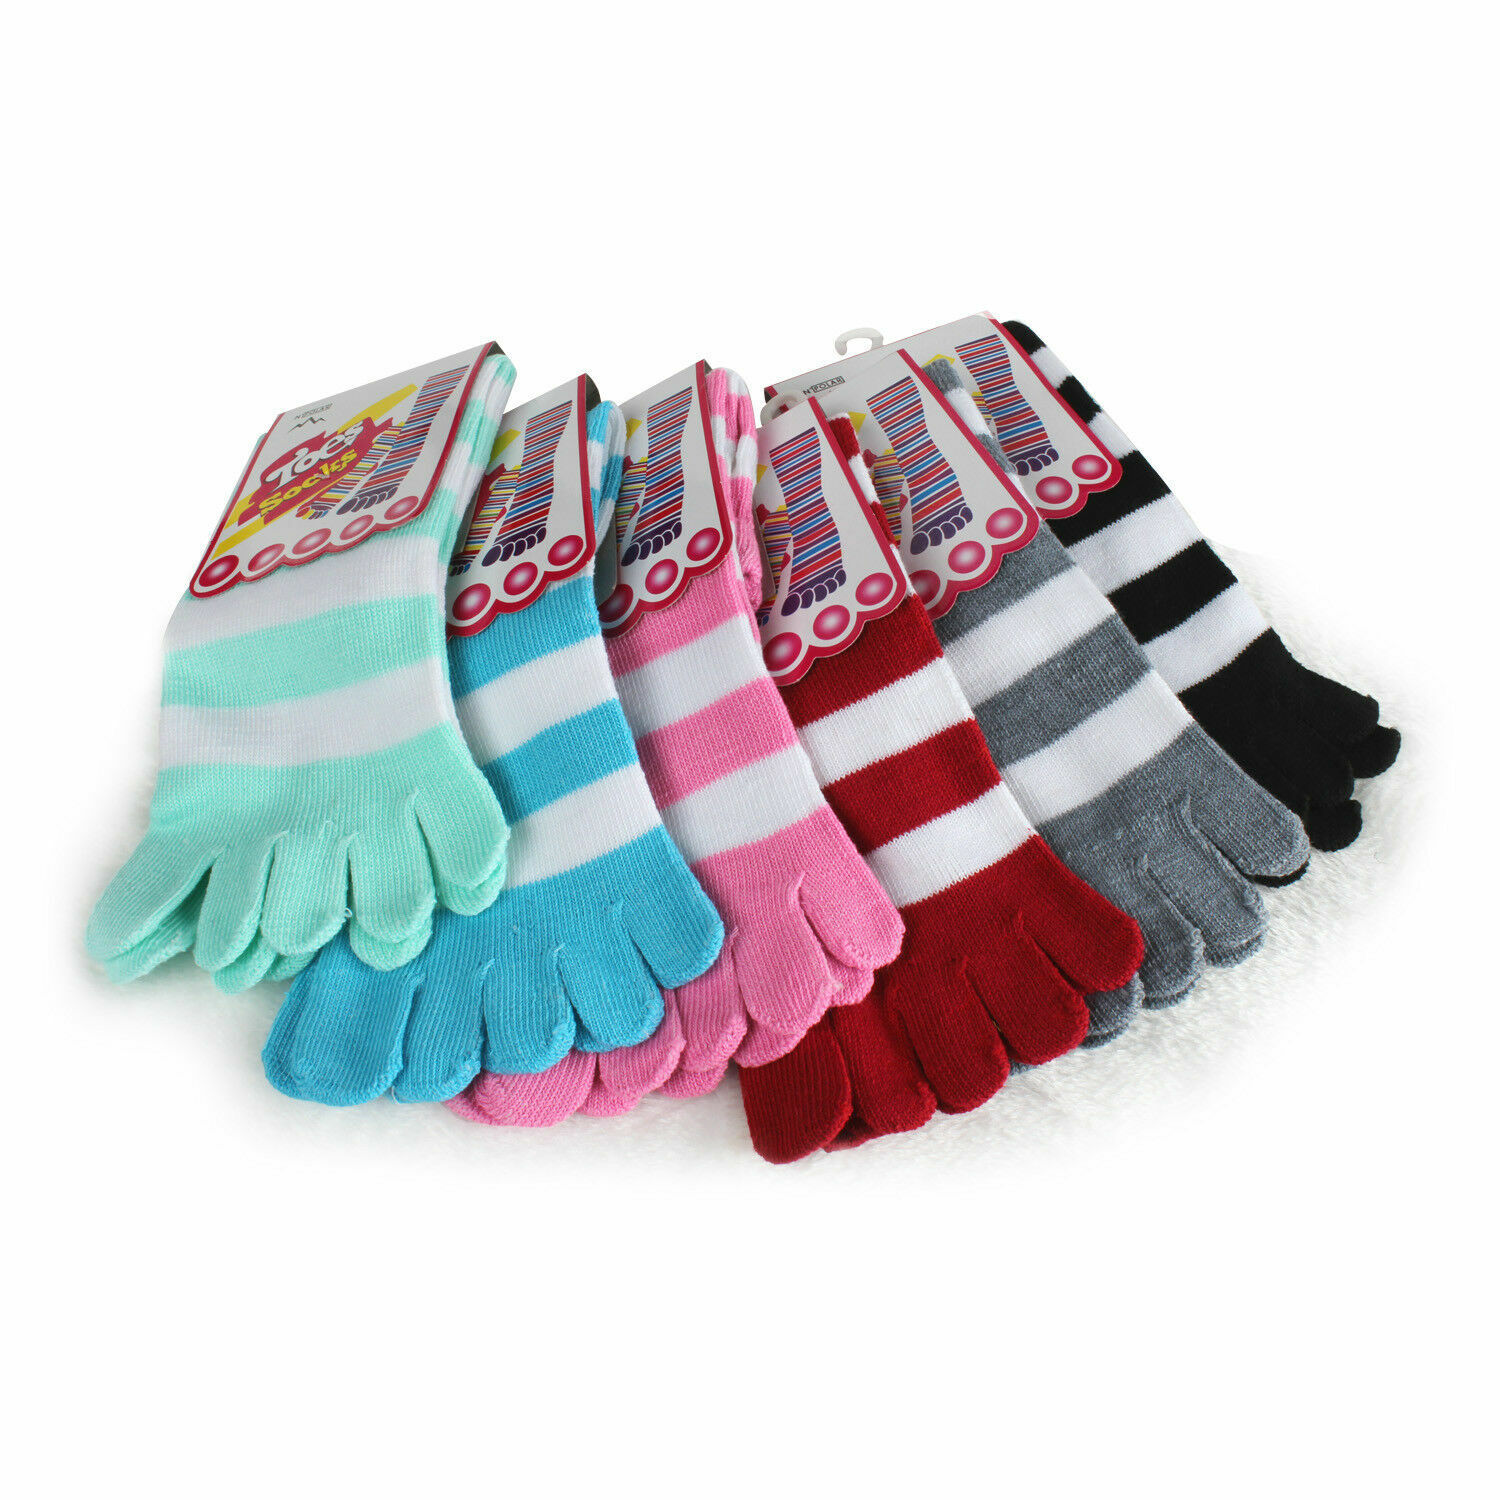 6 Pairs 5-Toes Warm Toe Socks Soft Breathable Ankle Athletic Fashion Socks Women N‘POLAR Does not apply - фотография #11